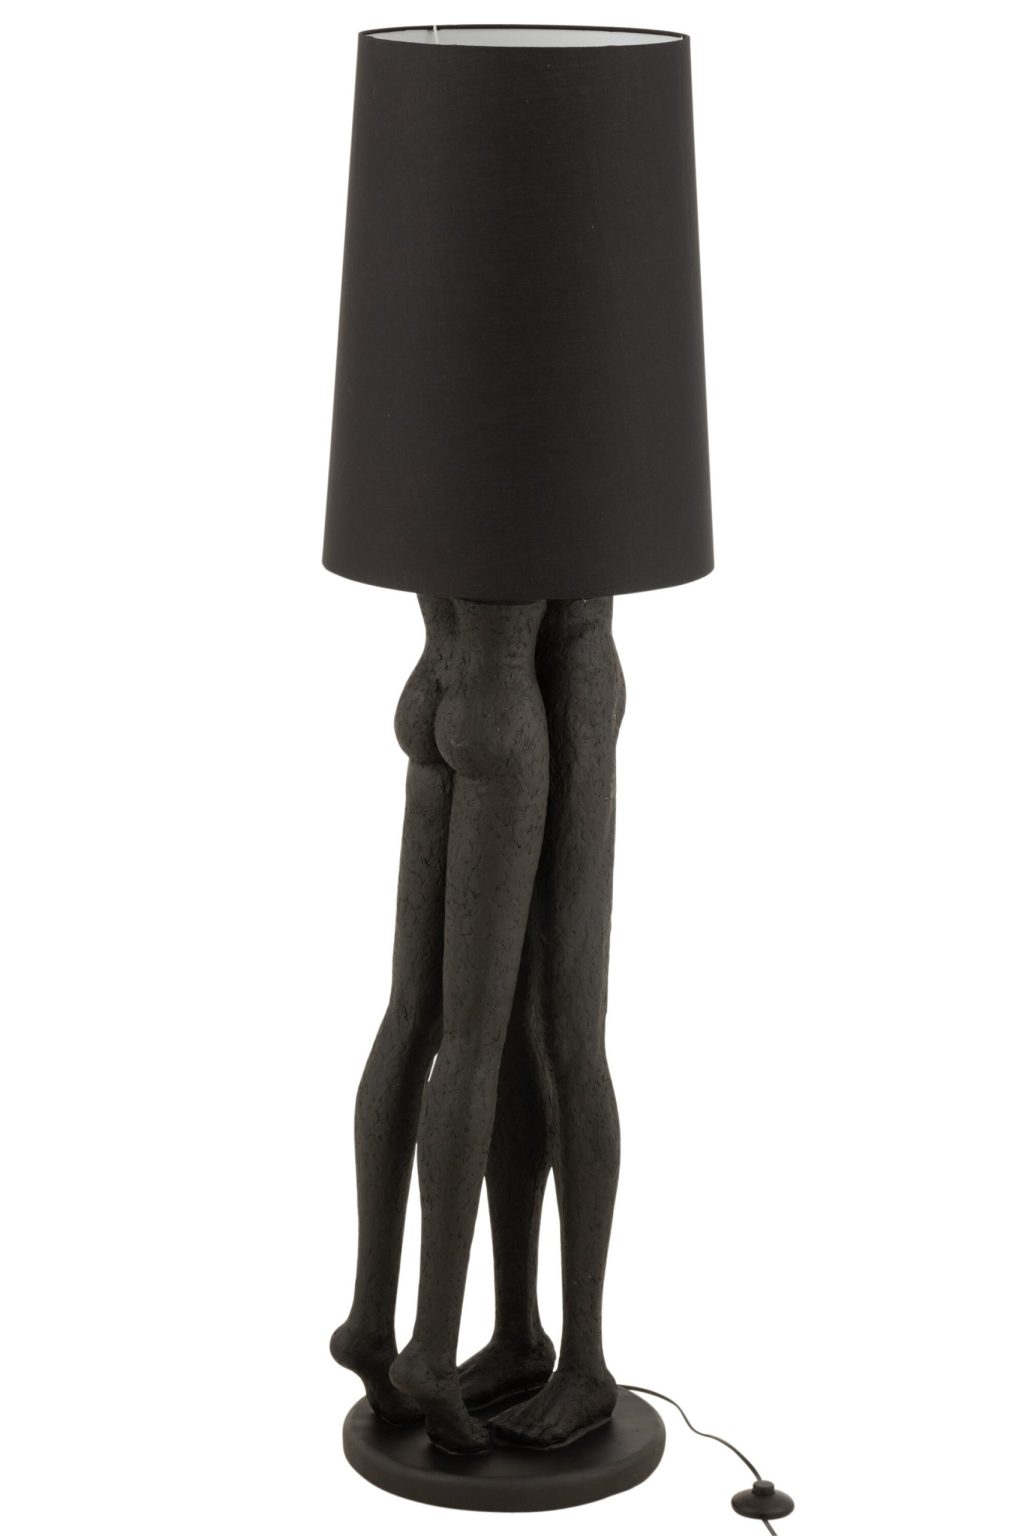 moderne-zwarte-tafellamp-mensfiguren-jolipa-couple-16010-1